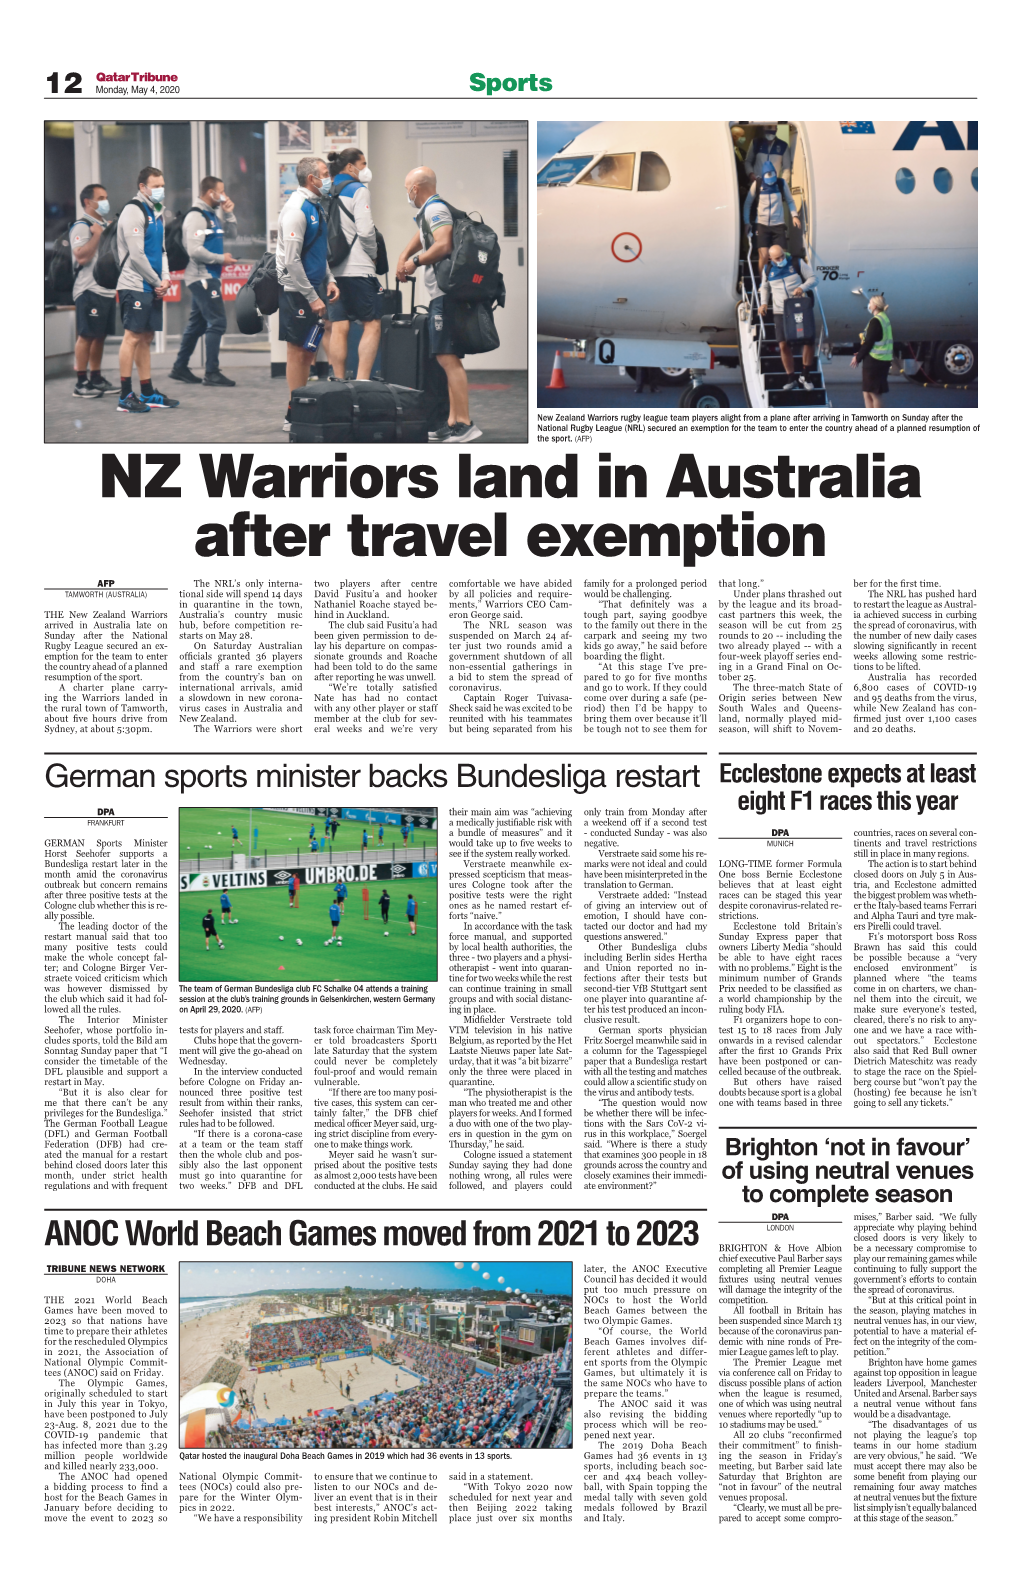 NZ Warriors Land in Australia After Travel Exemption